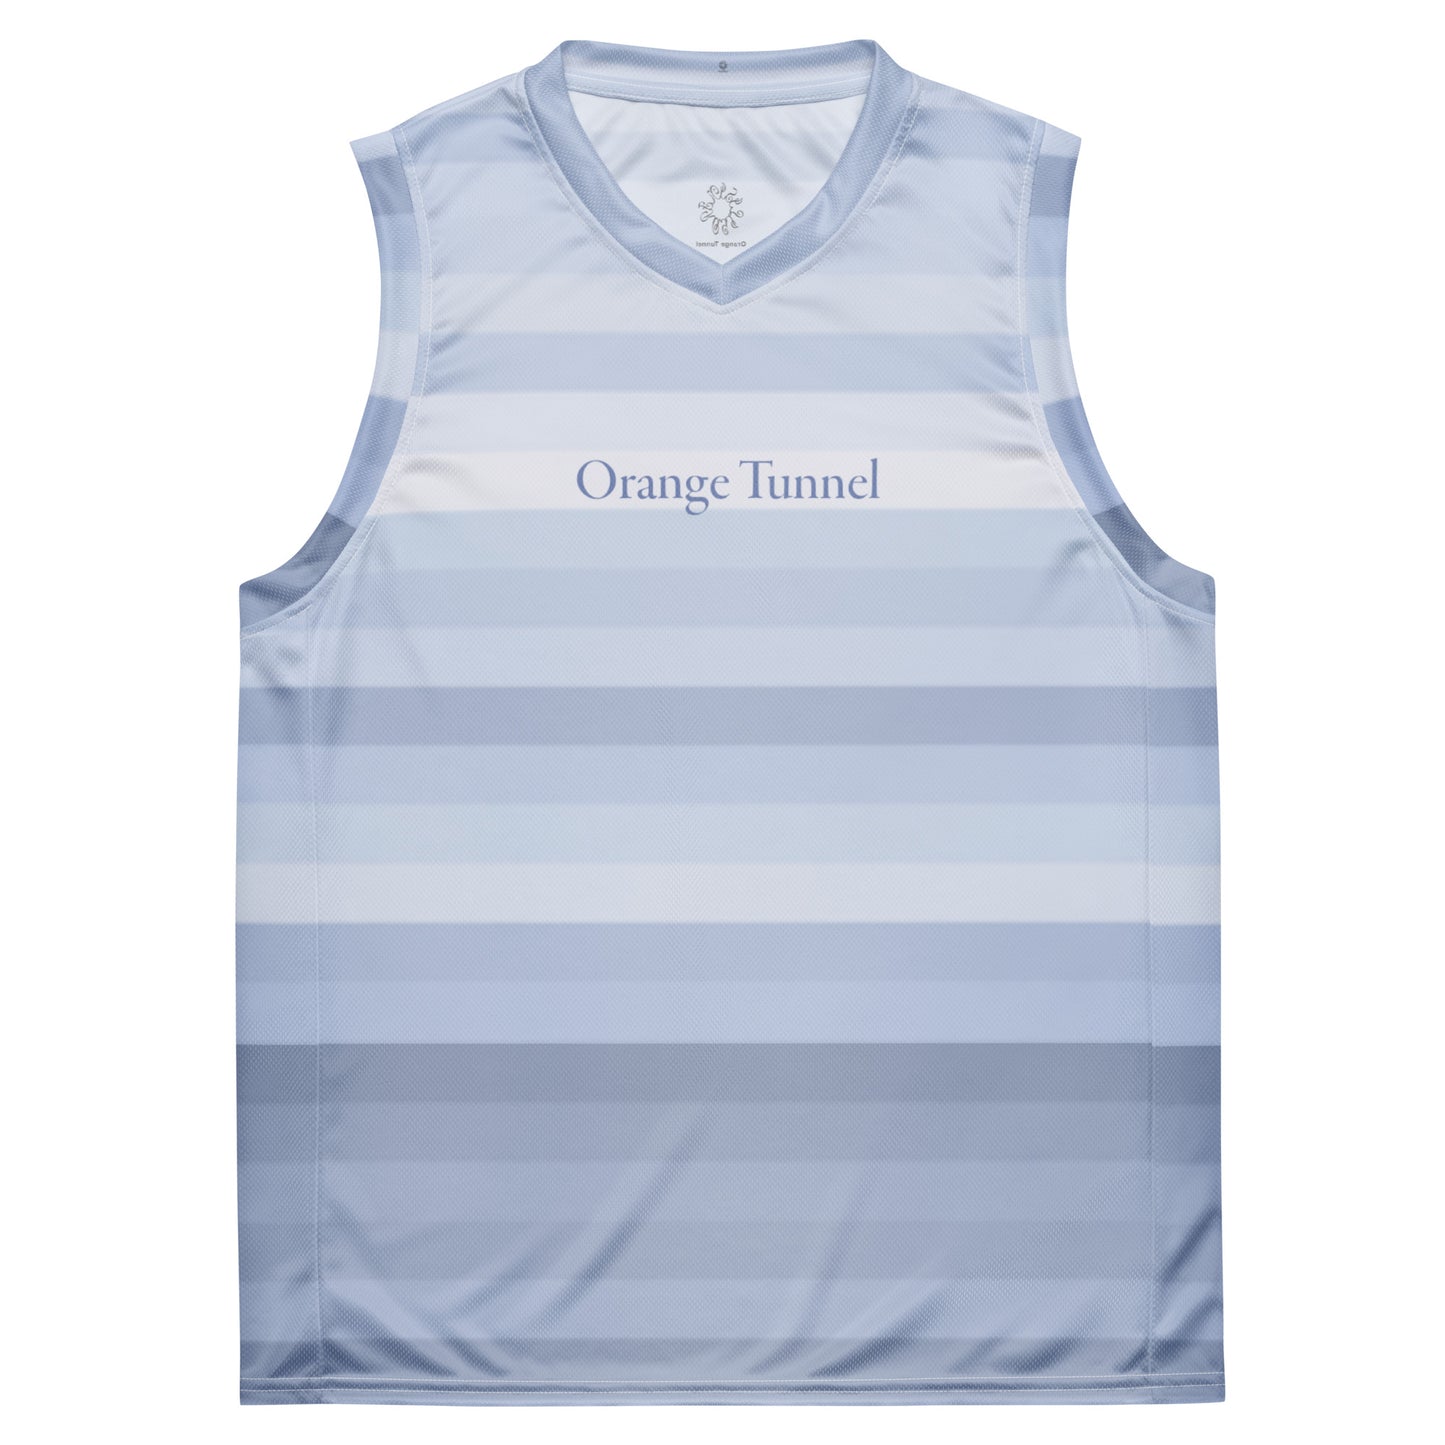 Orange Tunnel Recycled unisex basketball jersey